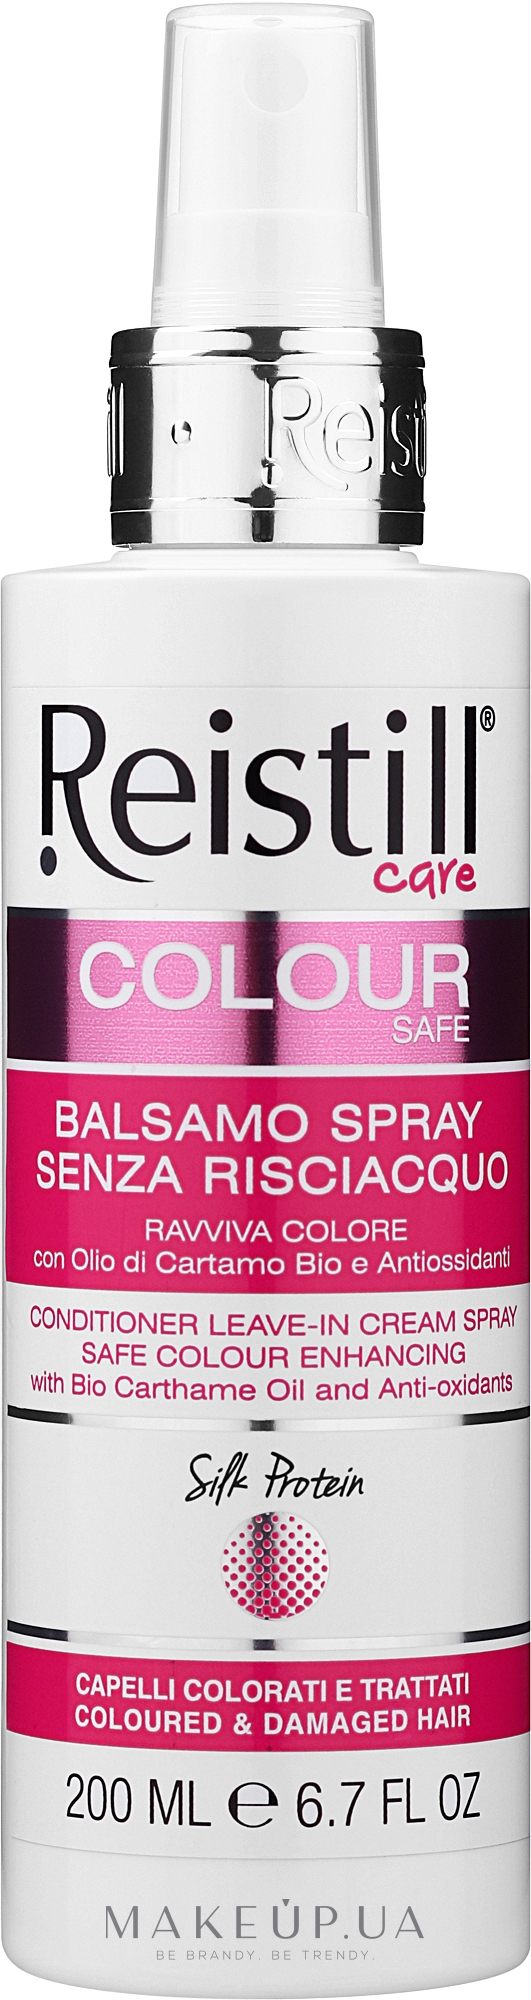 Несмываемый кондиционер для защиты цвета волос - Reistill Colour Care Conditioner Leave-in Cream Spray — фото 200ml